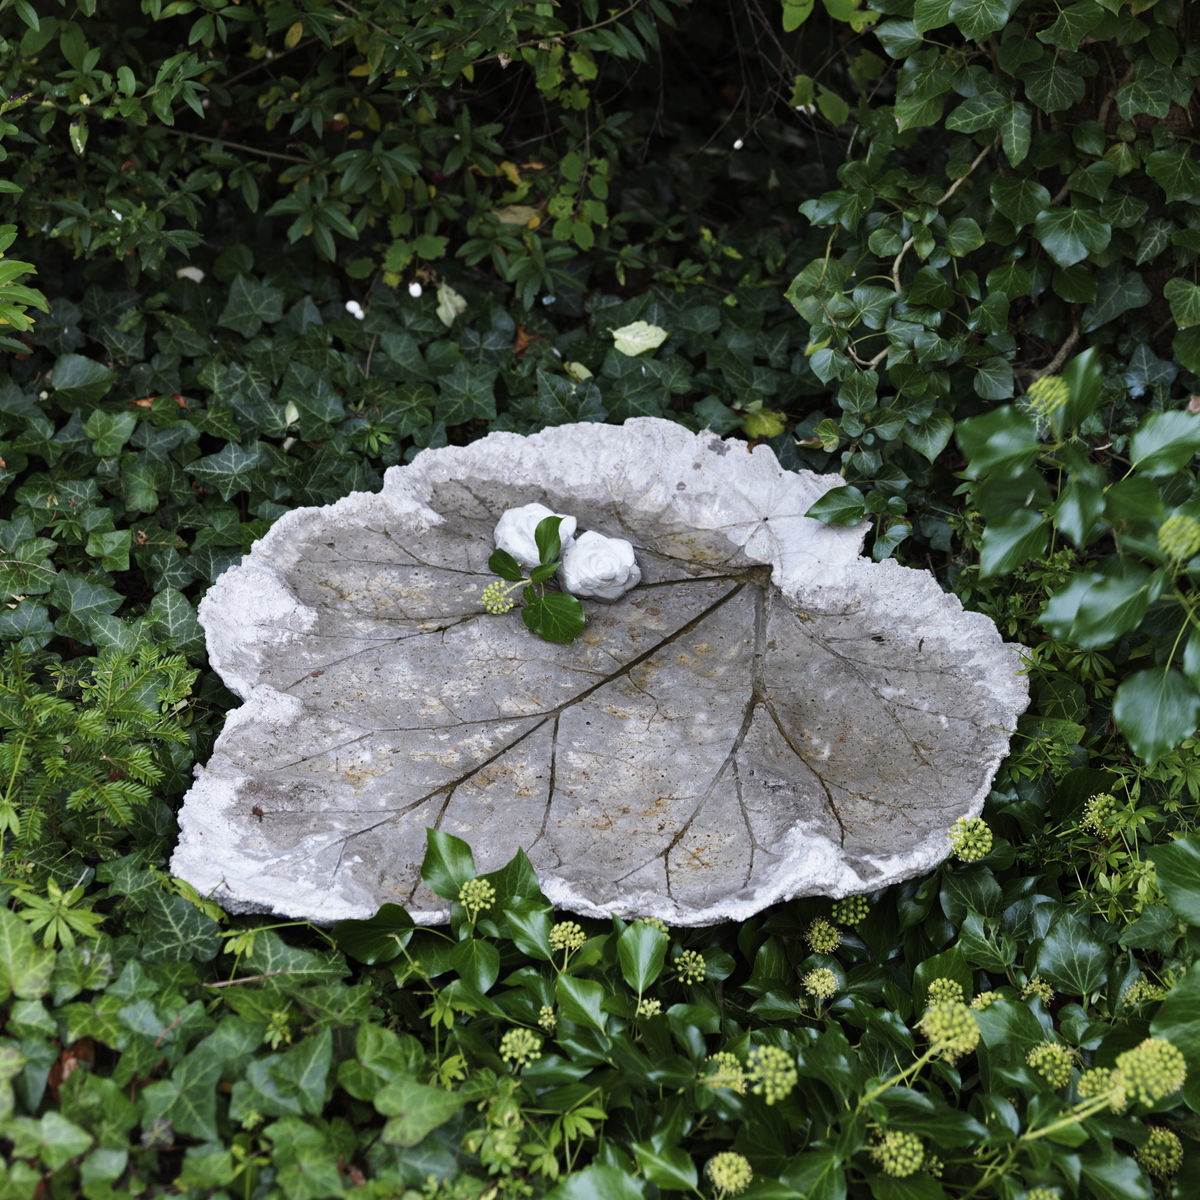 Cast a concrete dish out of a rhubarb leaf